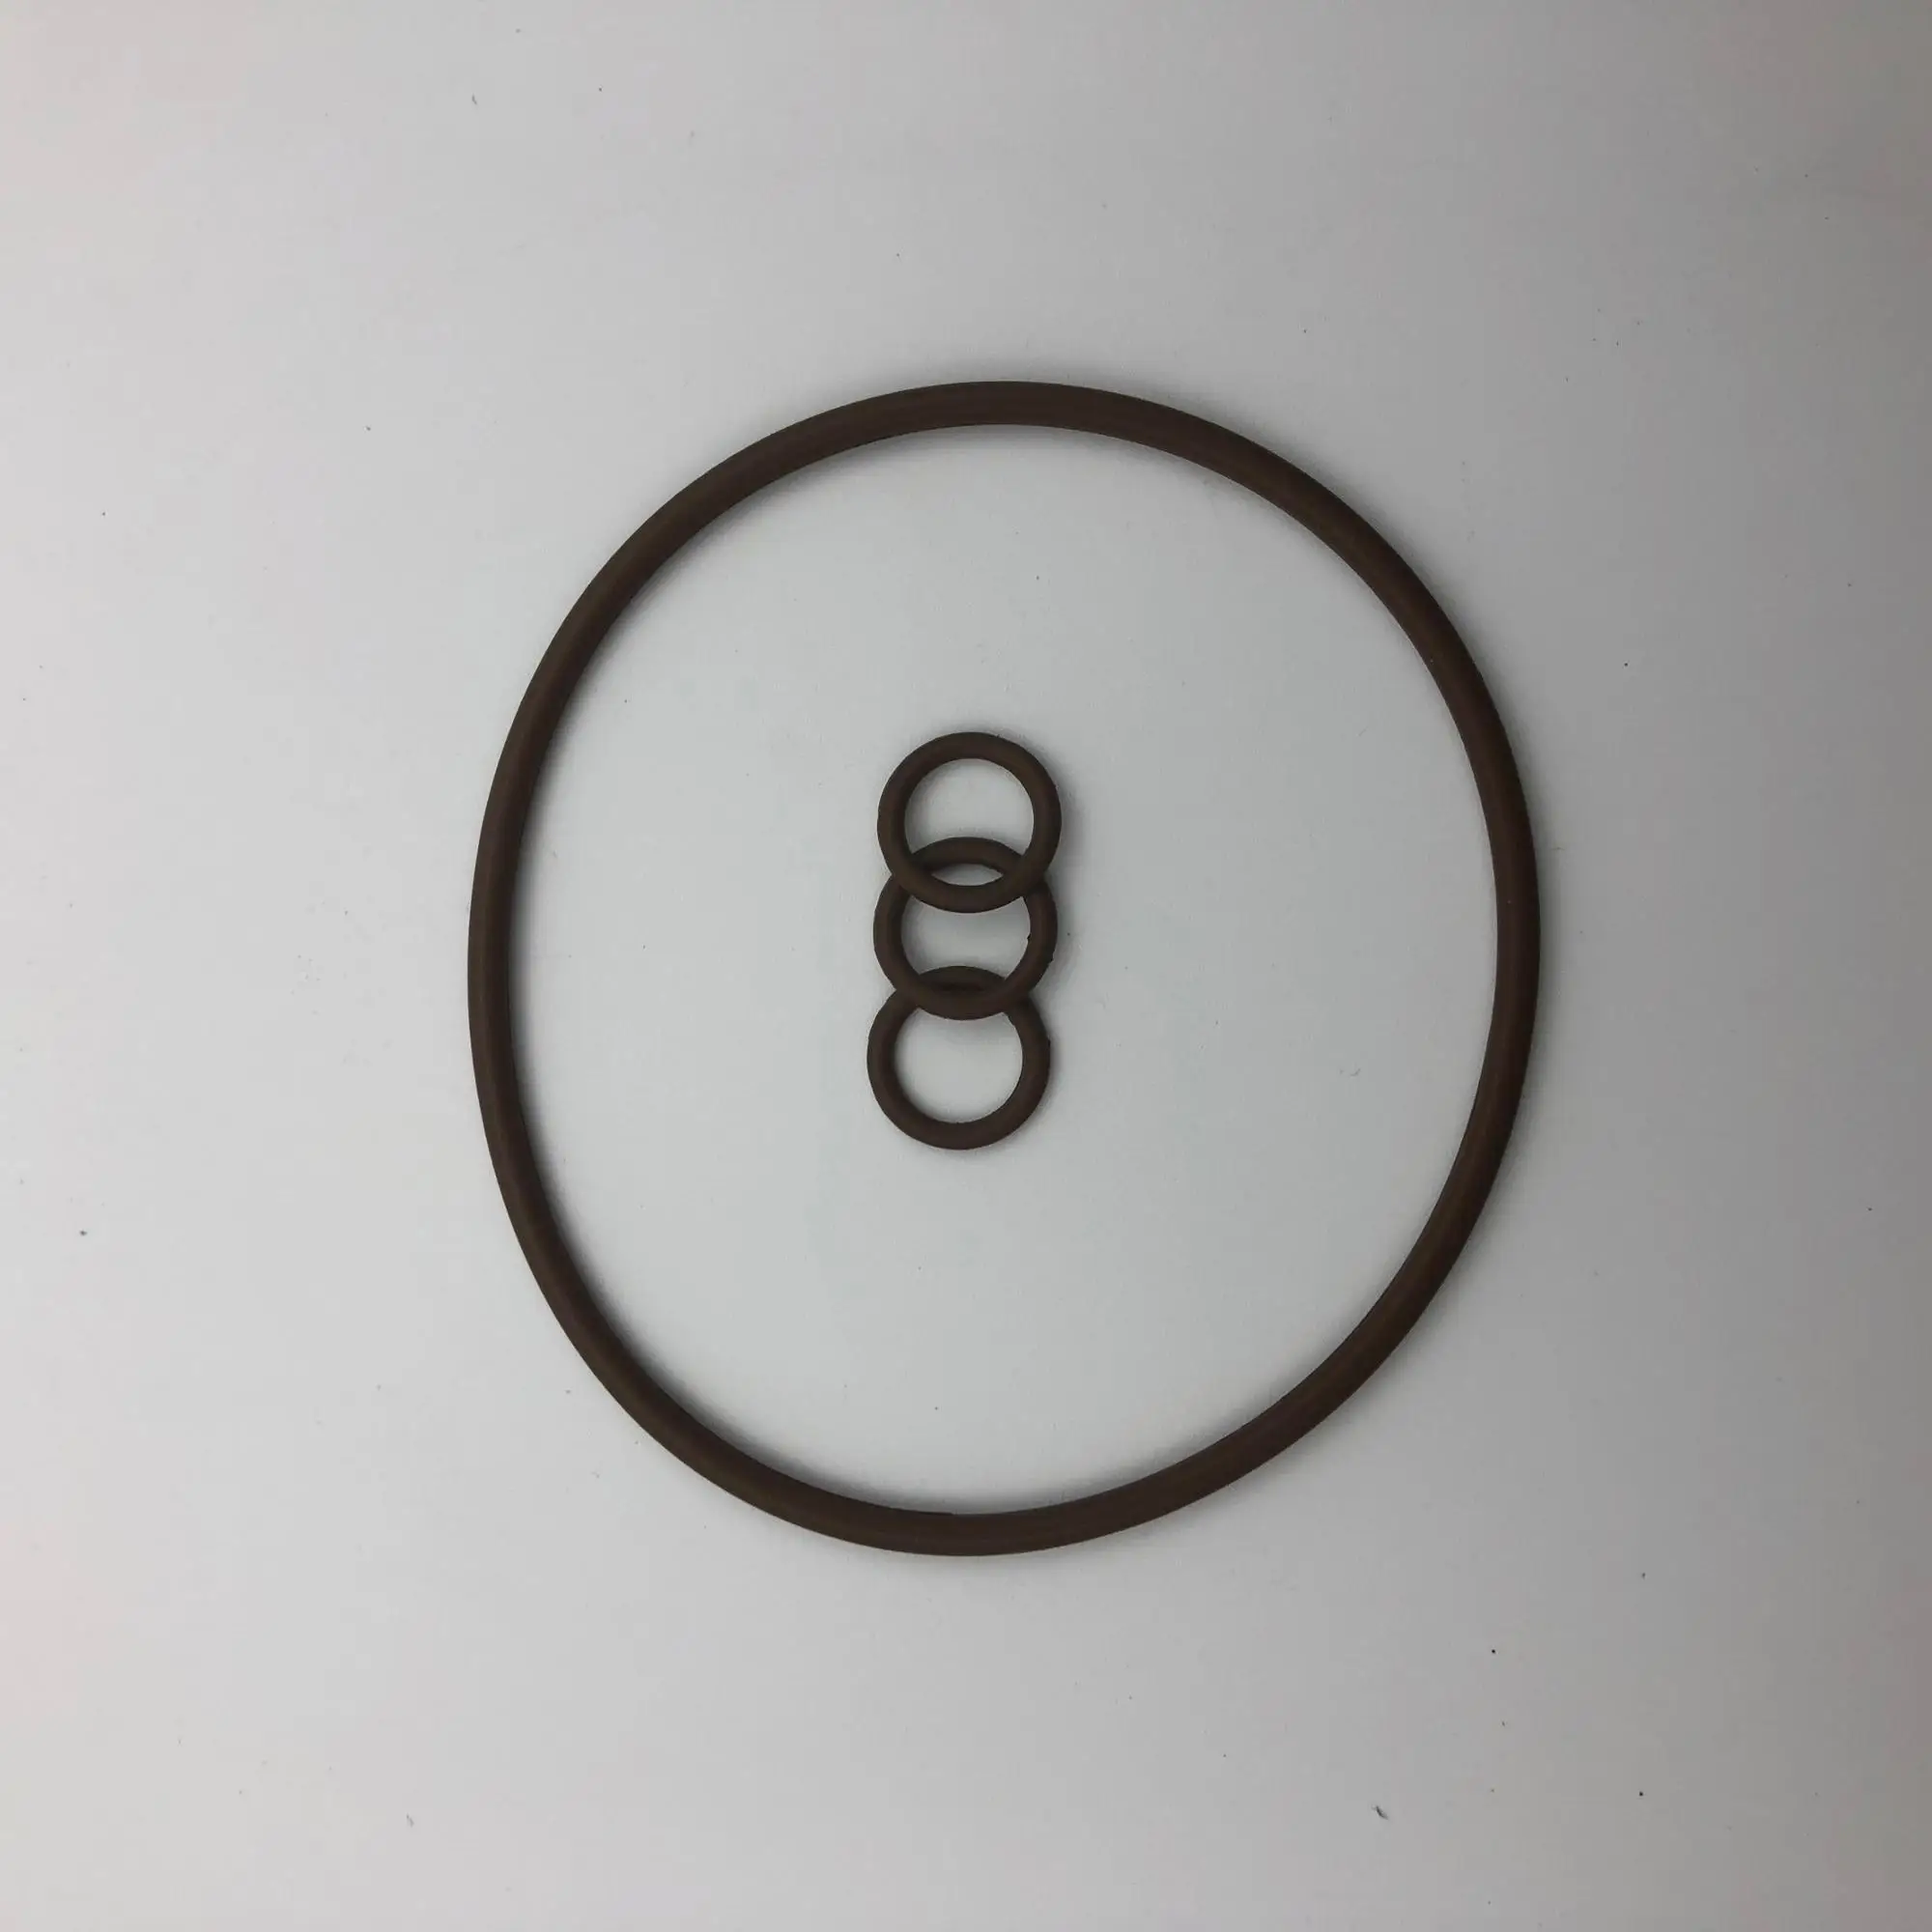 fda 的硅橡胶 o型圈 buy 透明硅橡胶 o型环,fkm o型环,彩色橡胶 o型